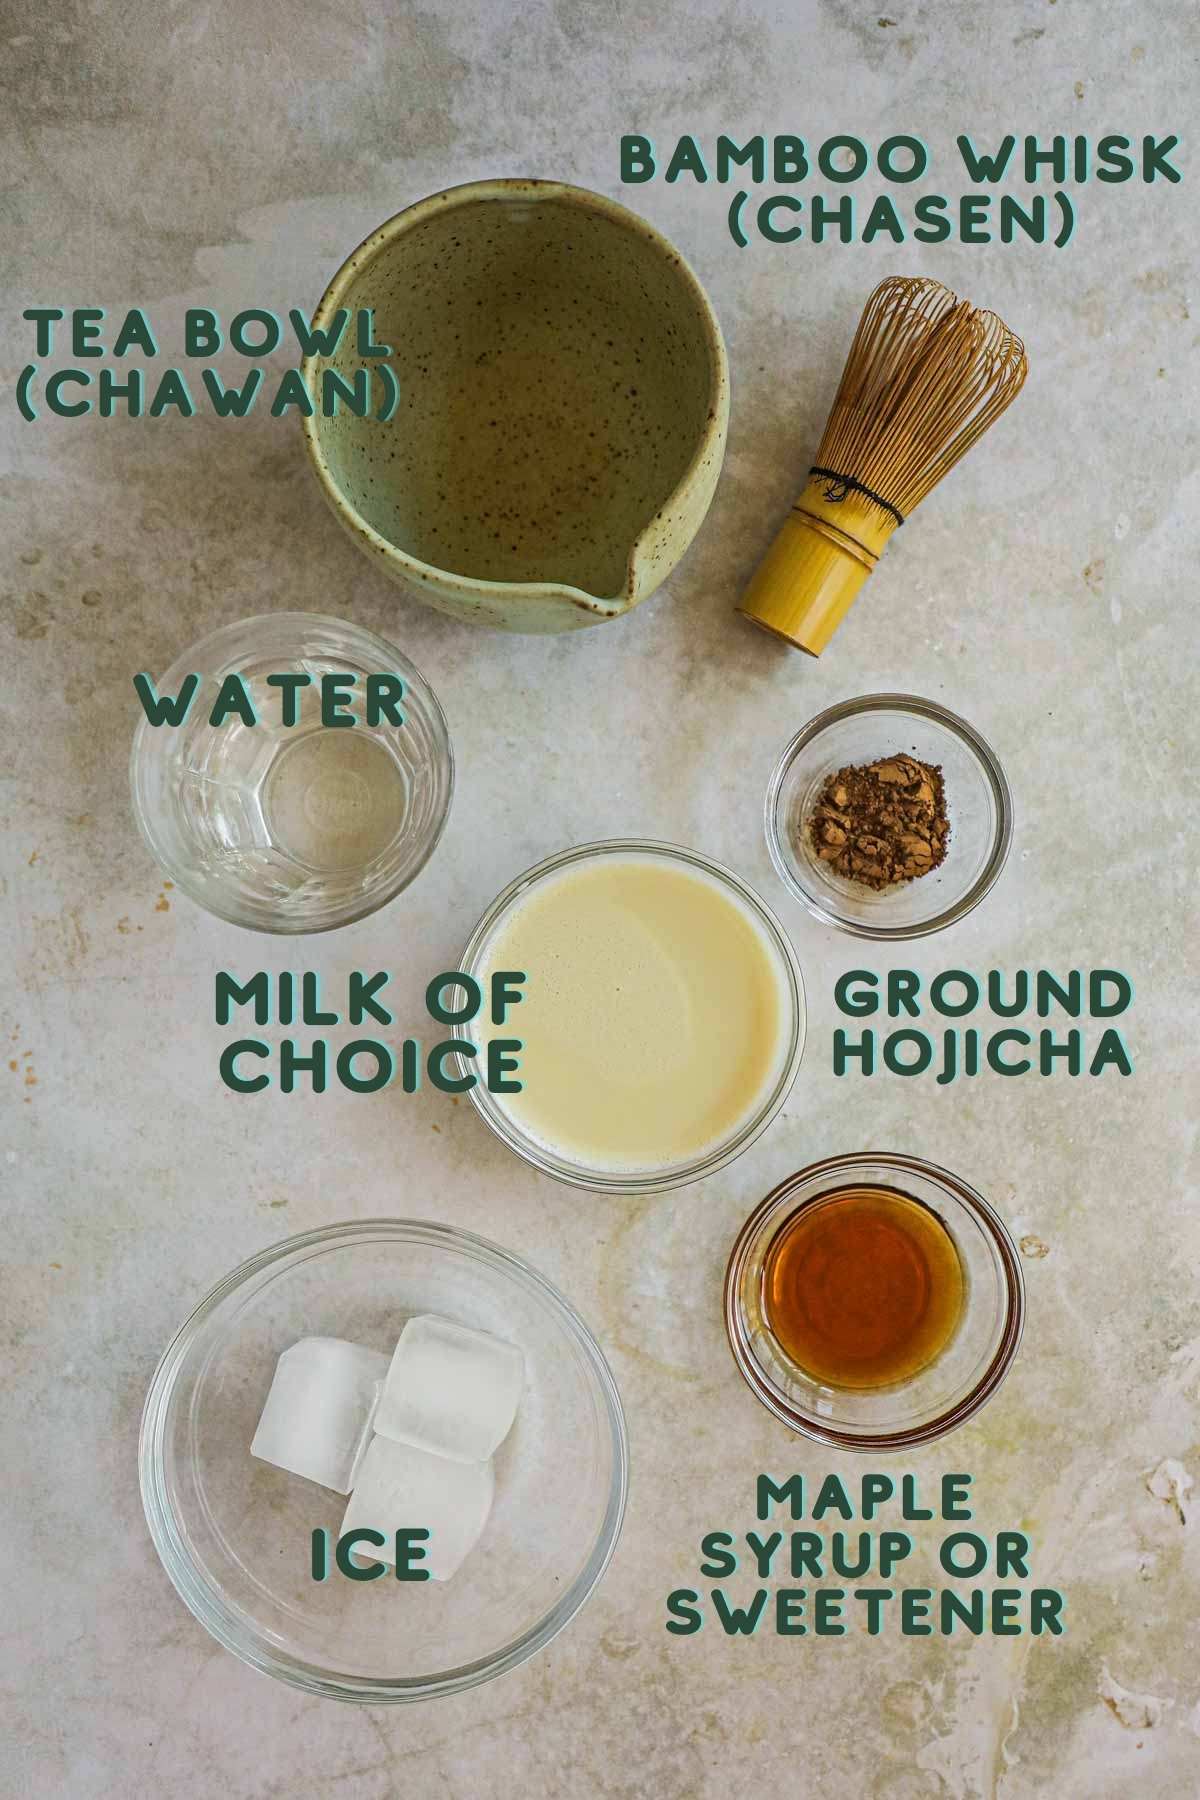 Ingredients to make Hojicha latte, including water, ground Hojicha, milk of choice, sweetener, and ice.